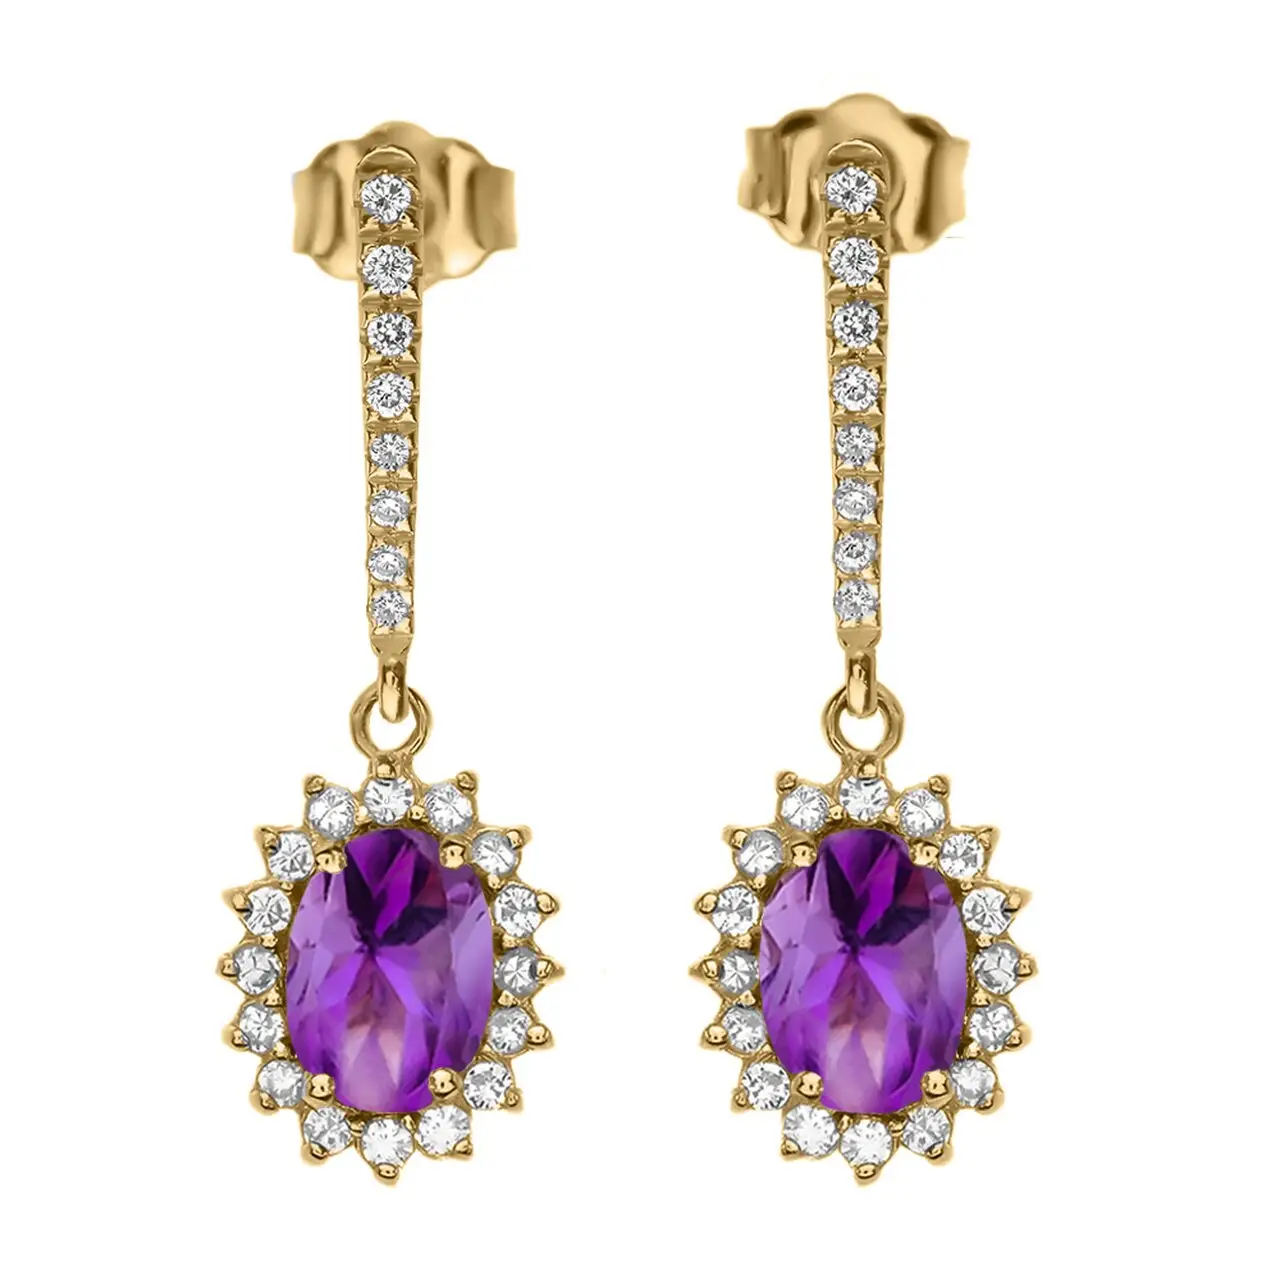 Luxury Jewelry Princess Cut Diamond and Amethyst Yellow Gold Earrings